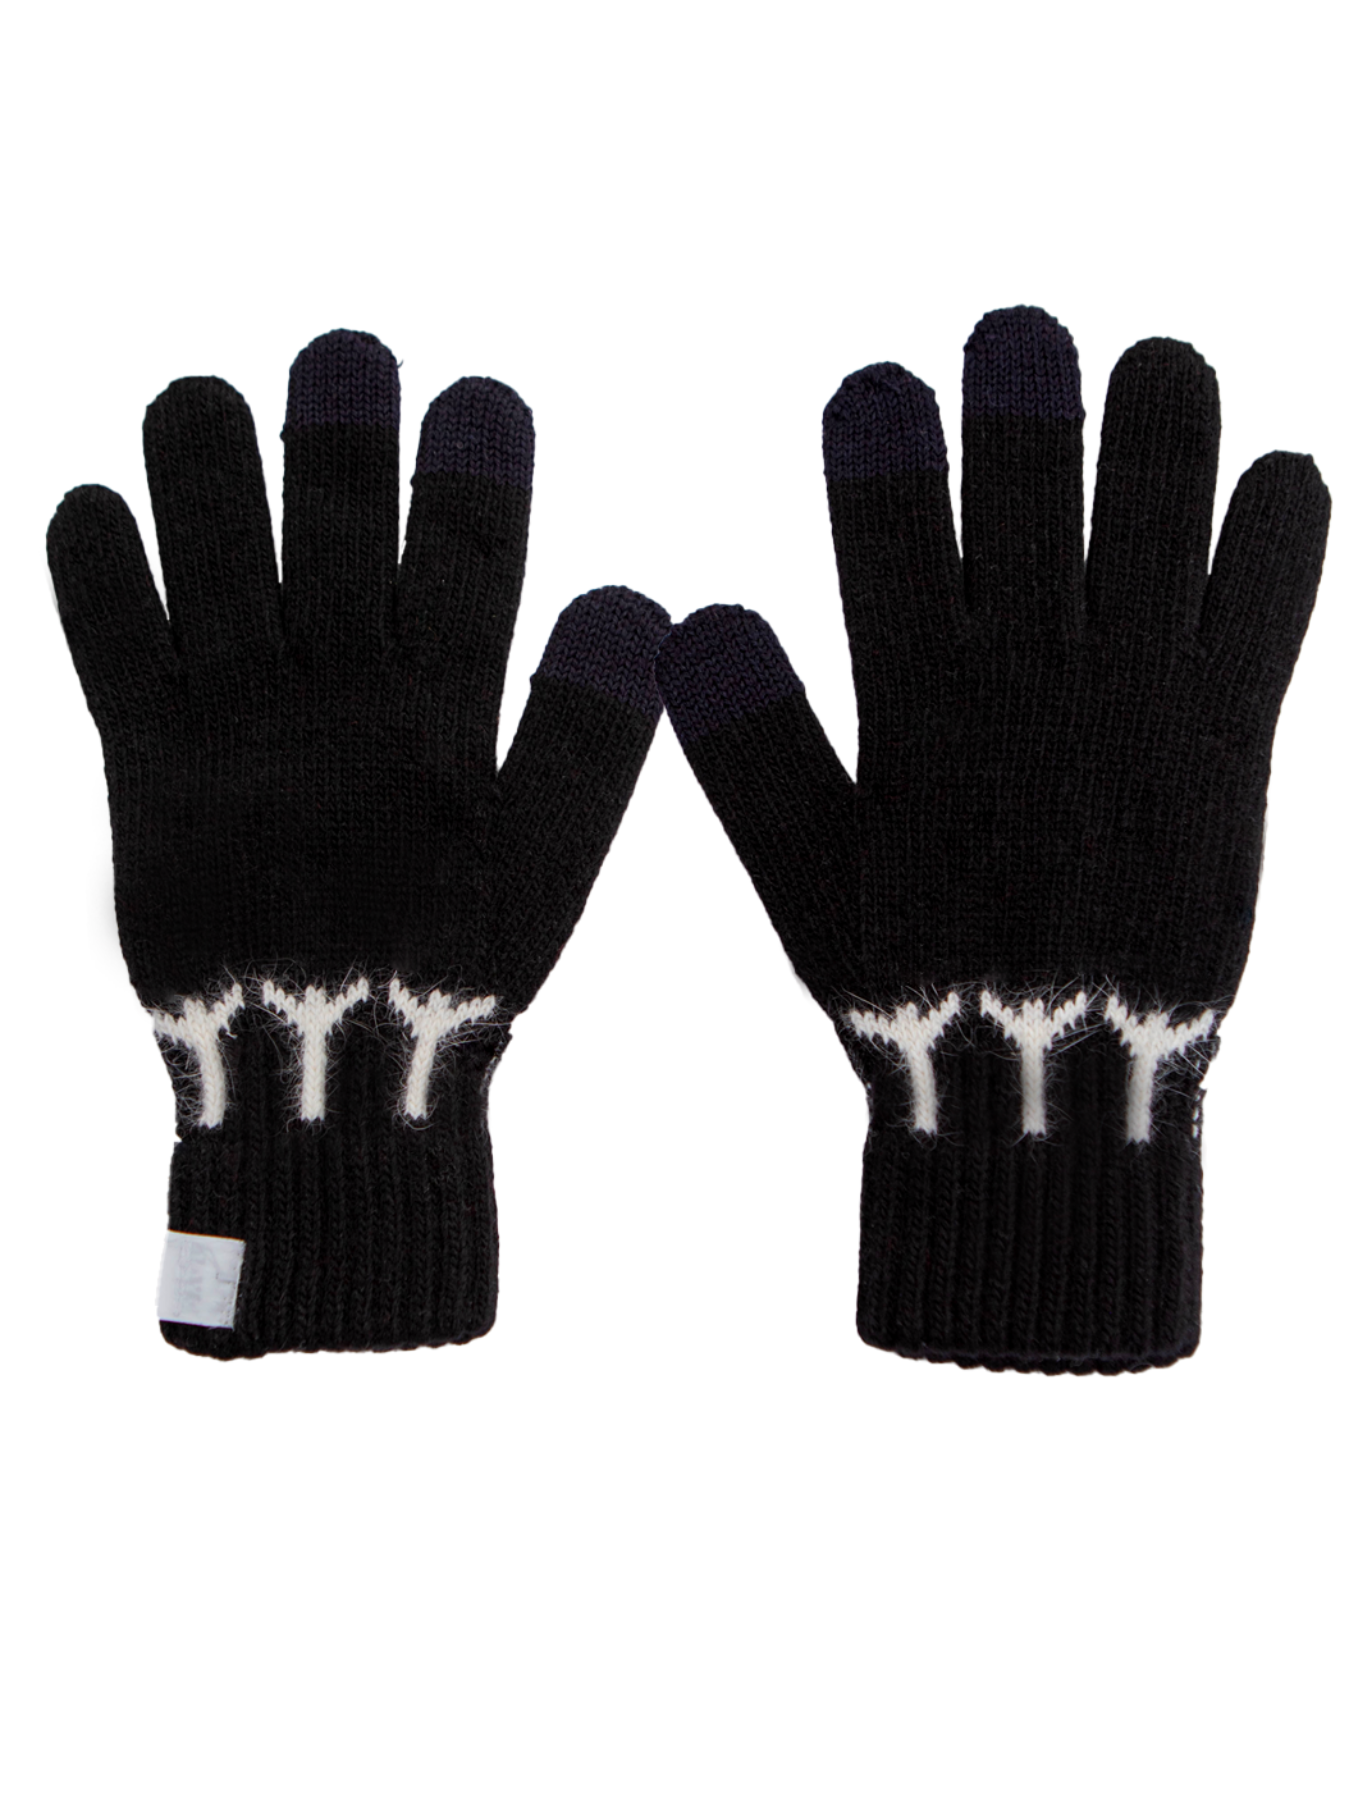 Symmetric gloves #17 [black]